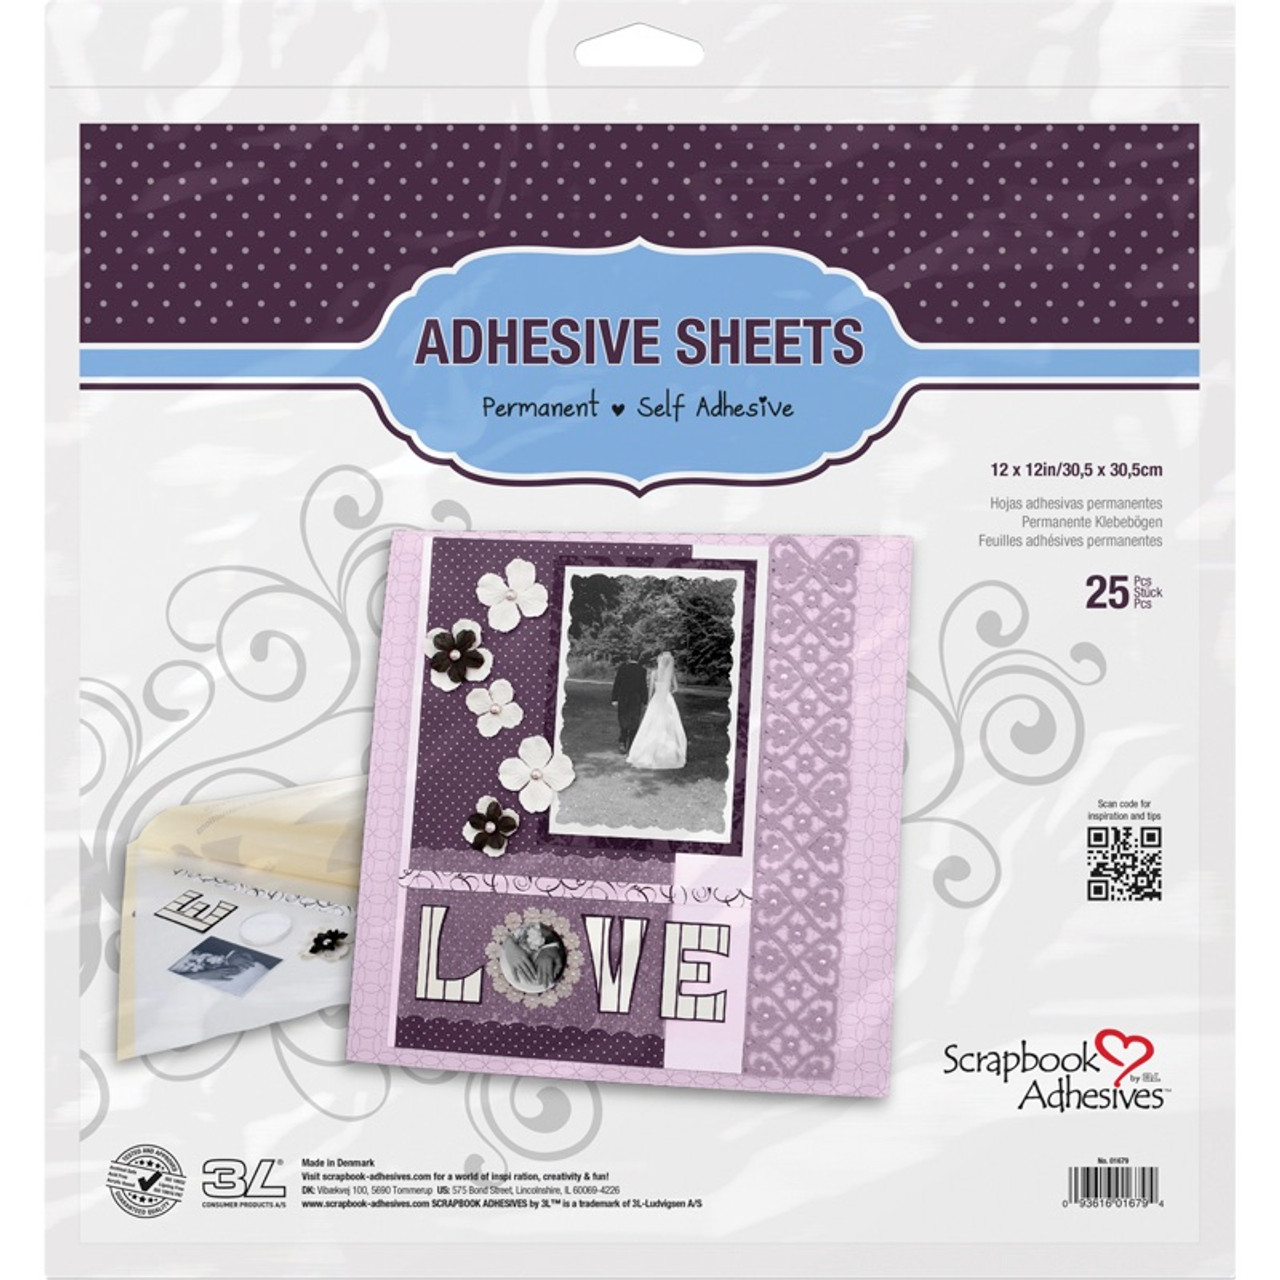 3L Scrapbook Adhesives Permanent Adhesive Sheets 25/PKG - 12x12